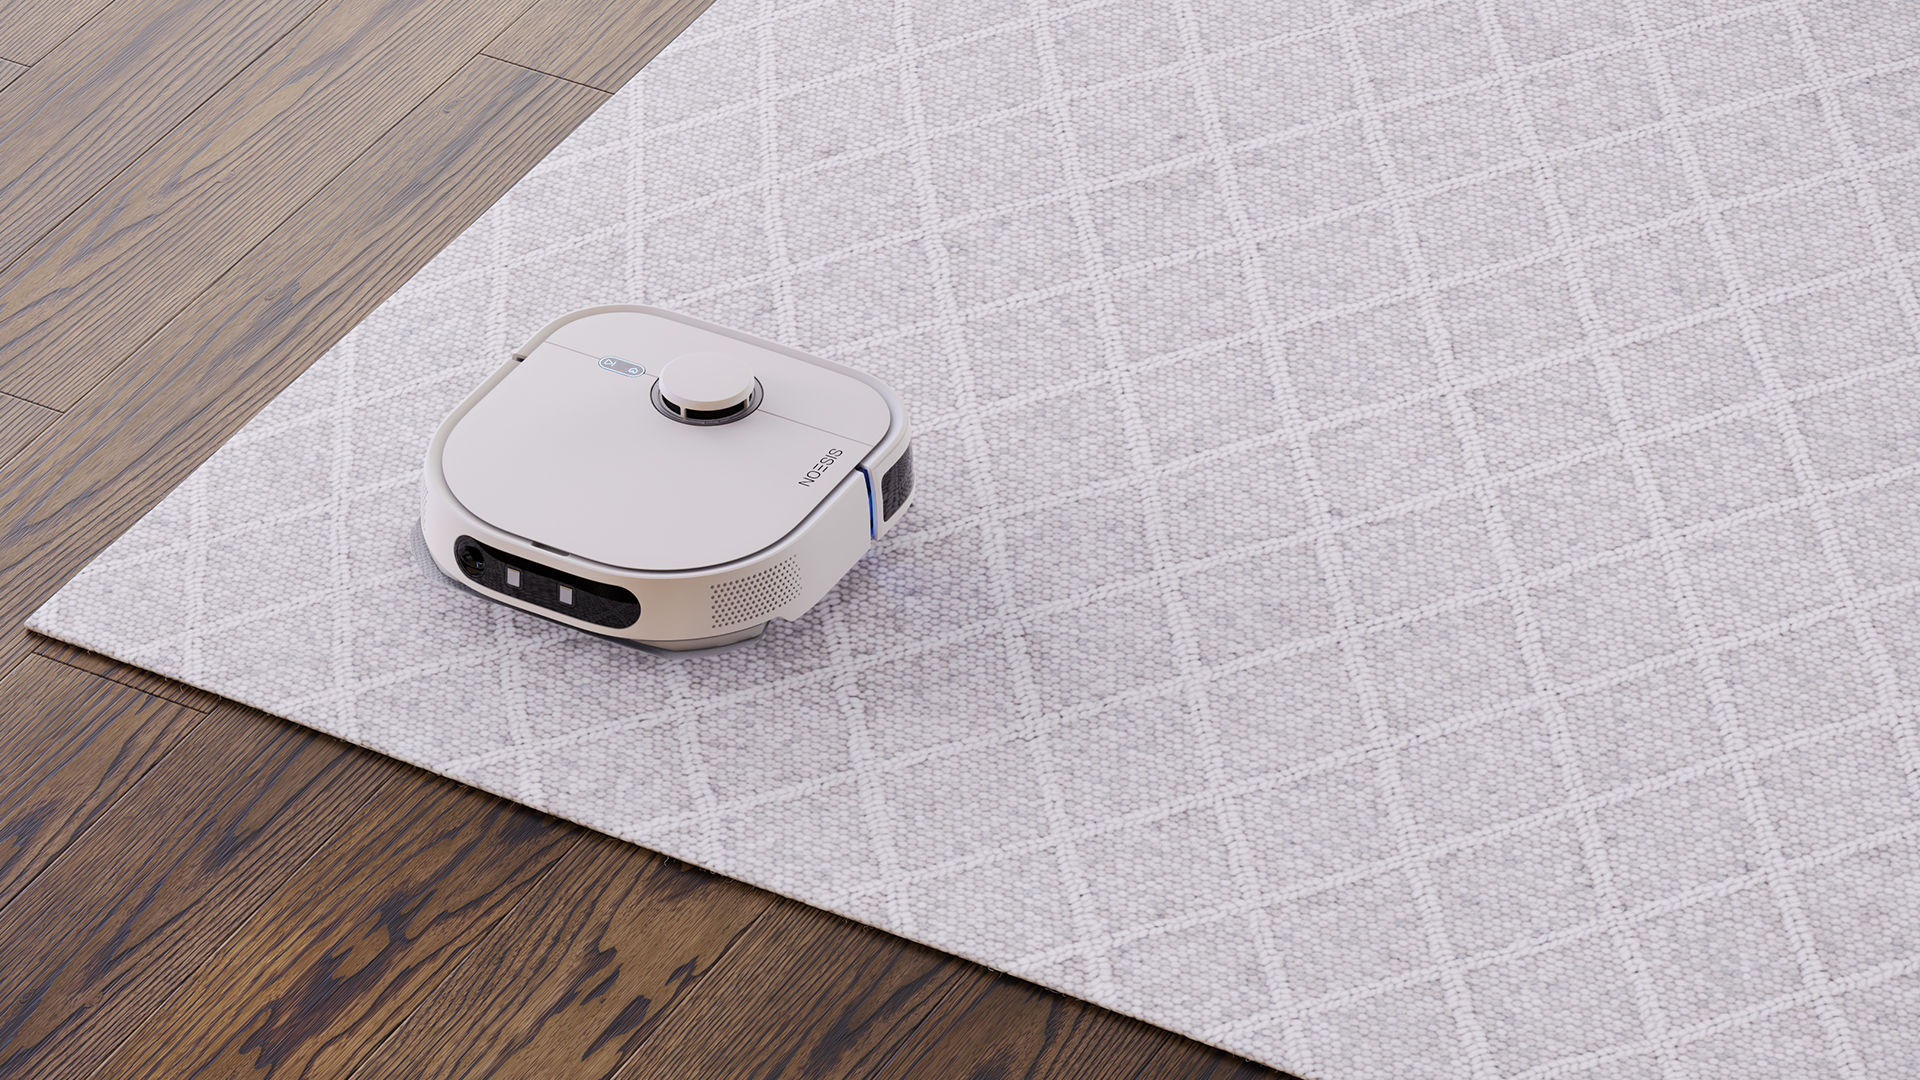 Noesis Robot on a clean grey rug next to wooden floor